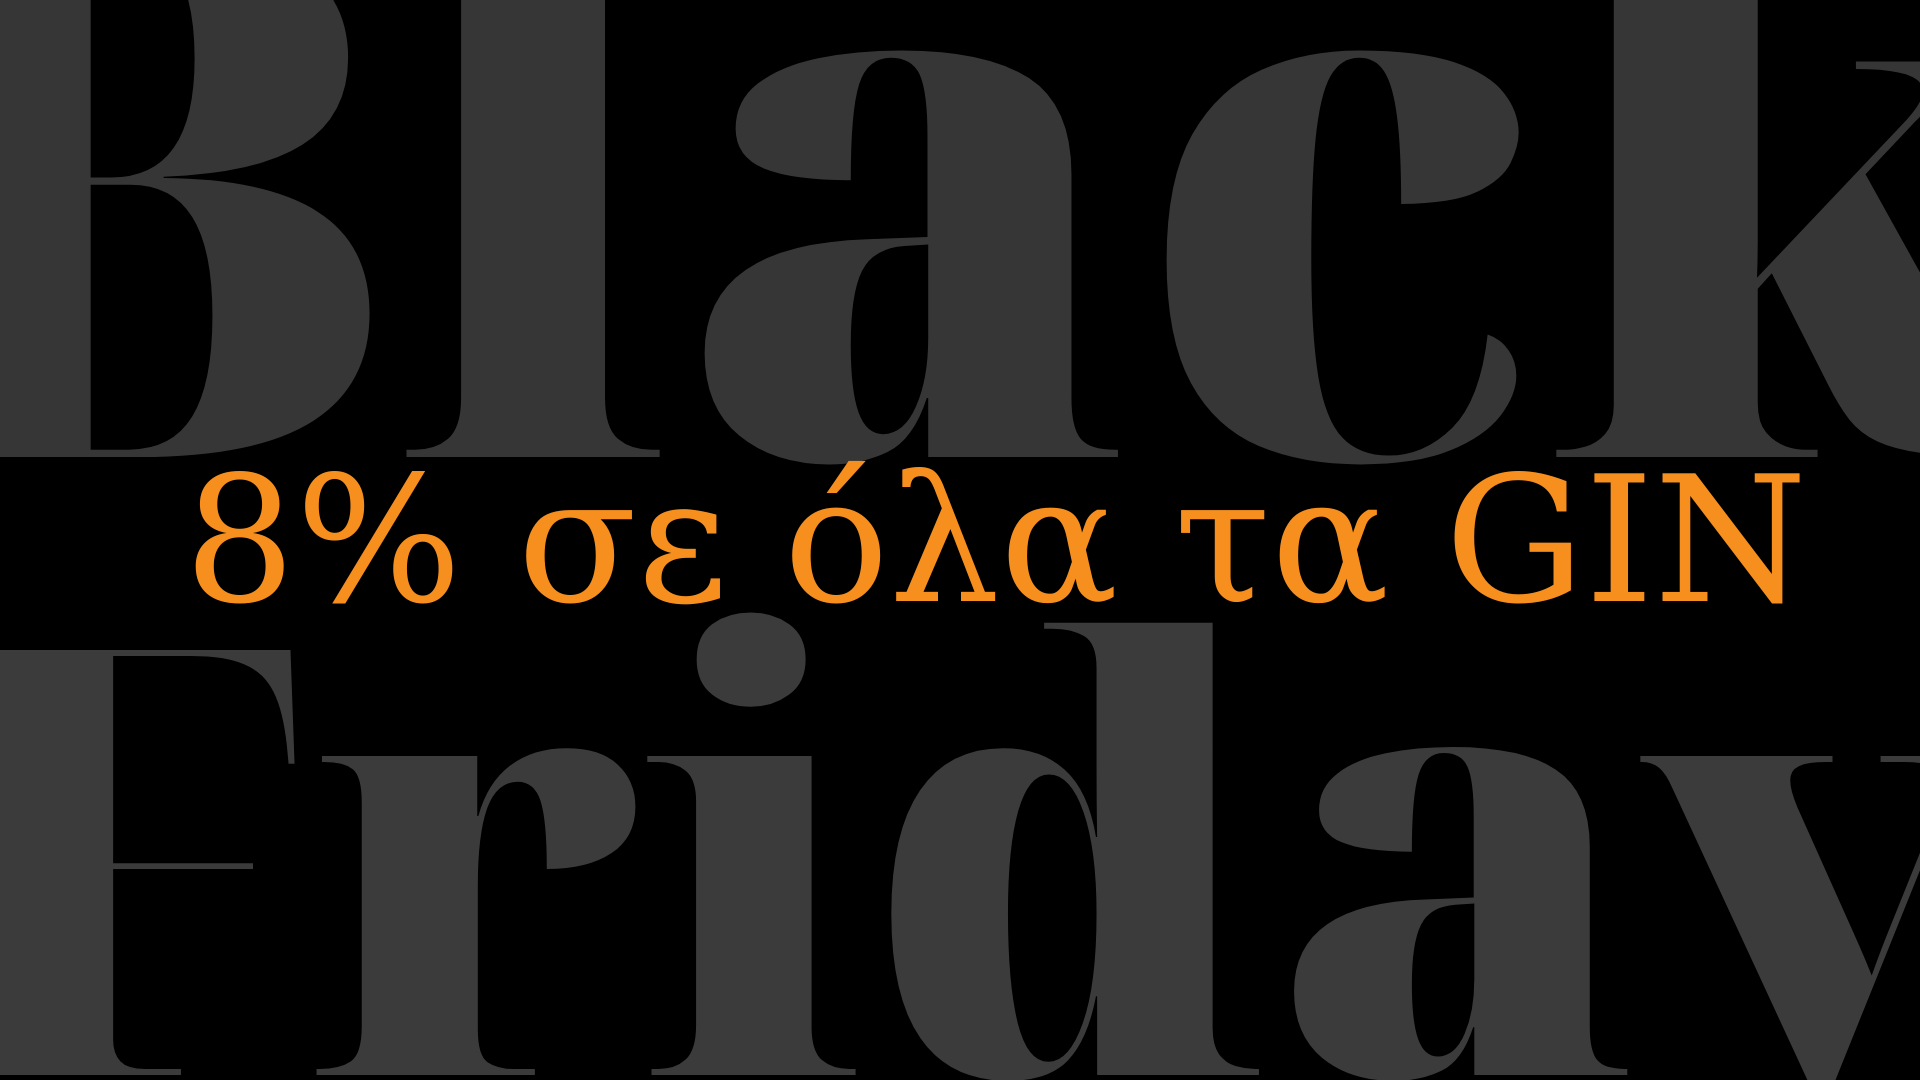 Black-Friday-Blog